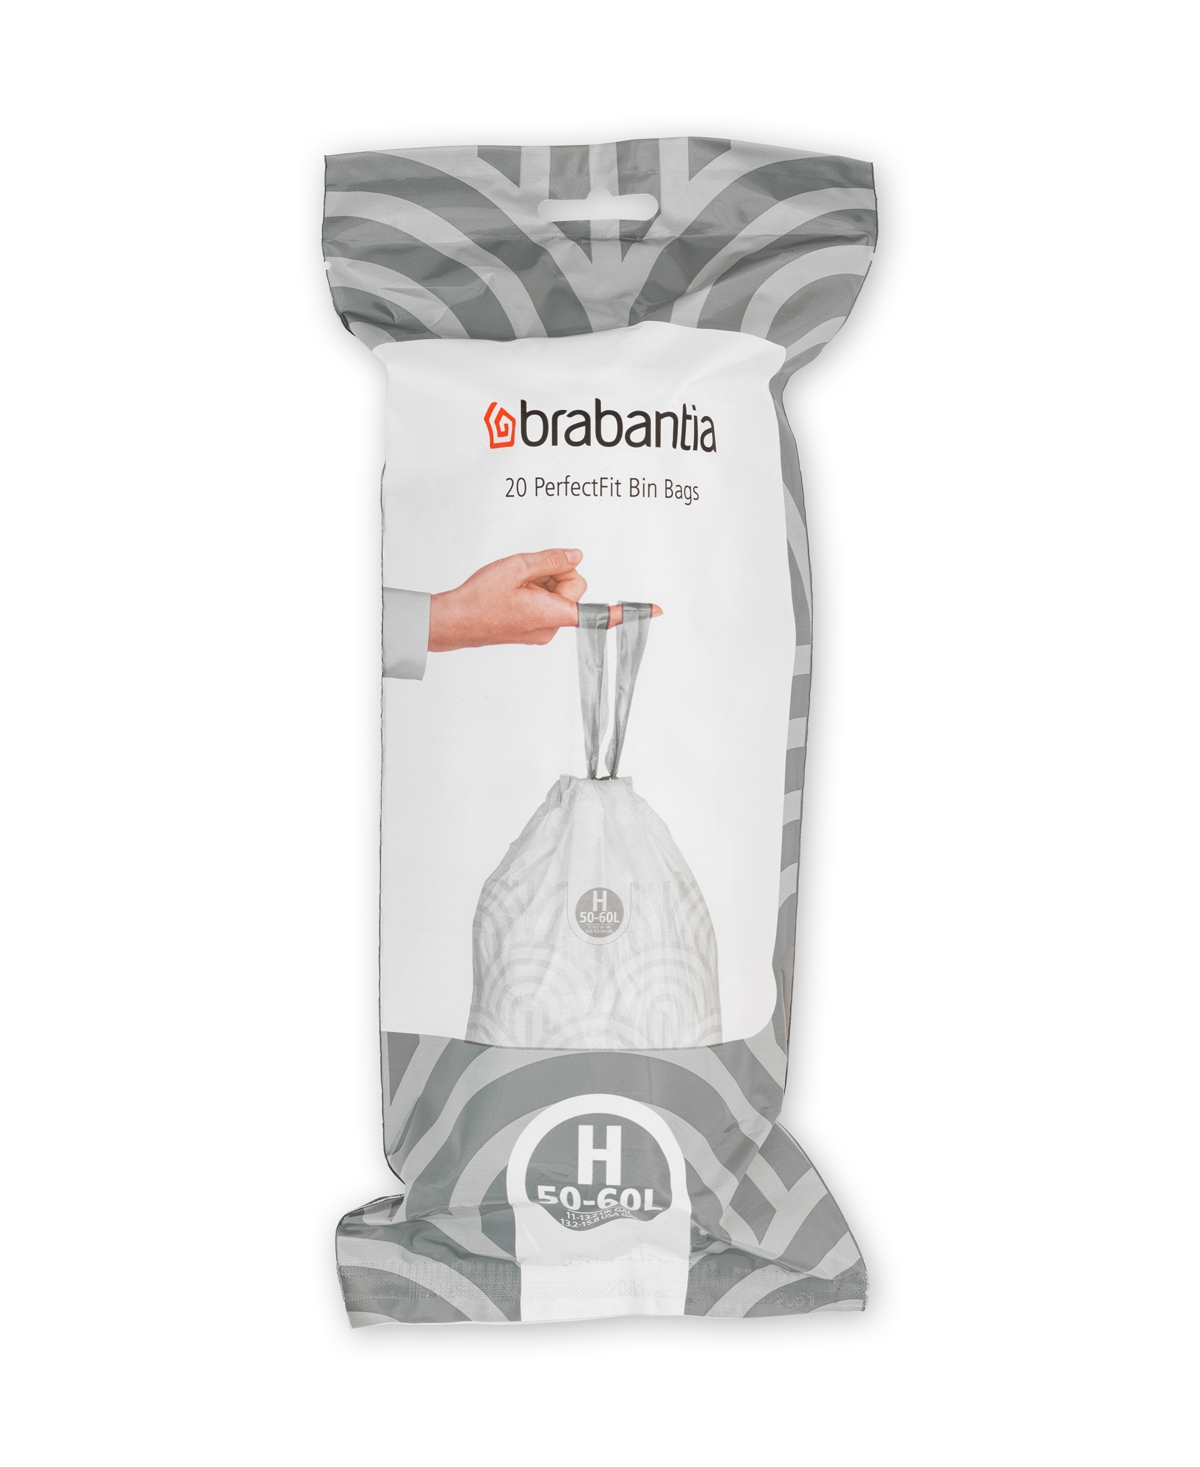 Brabantia Perfectfit Trash Bags, Code H, 13.2-16 Gallon, 50-60 Liter, 120 Trash Bags In White